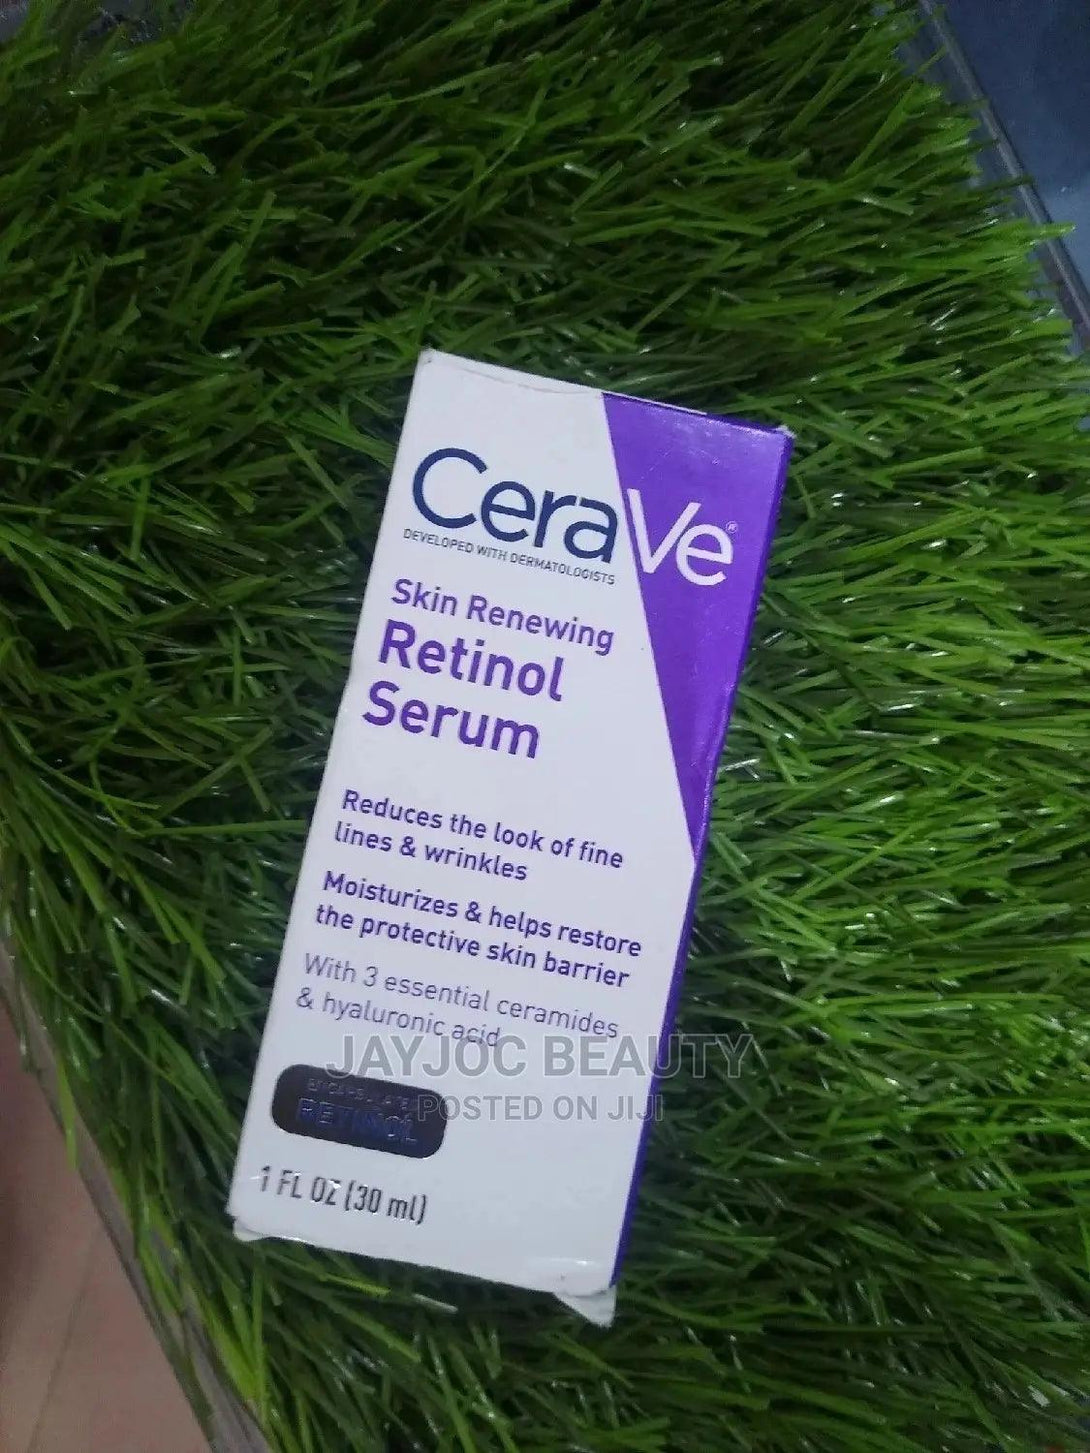 CeraVe - Skin Renewing Retinol Serum - 30ml Cosmetic Holic